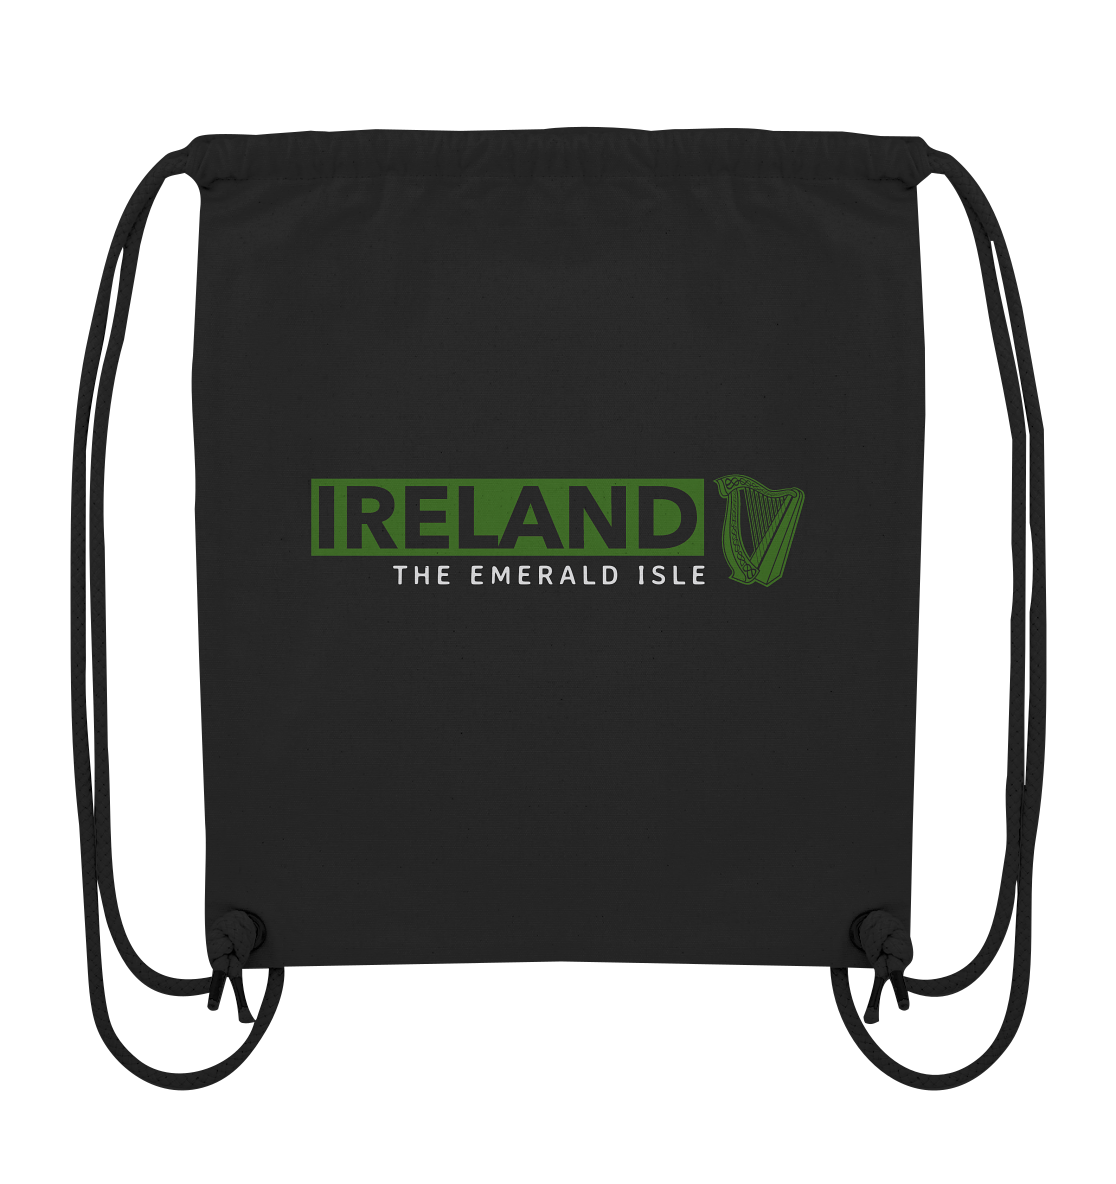 Ireland "The Emerald Isle / Harp" - Organic Gym-Bag